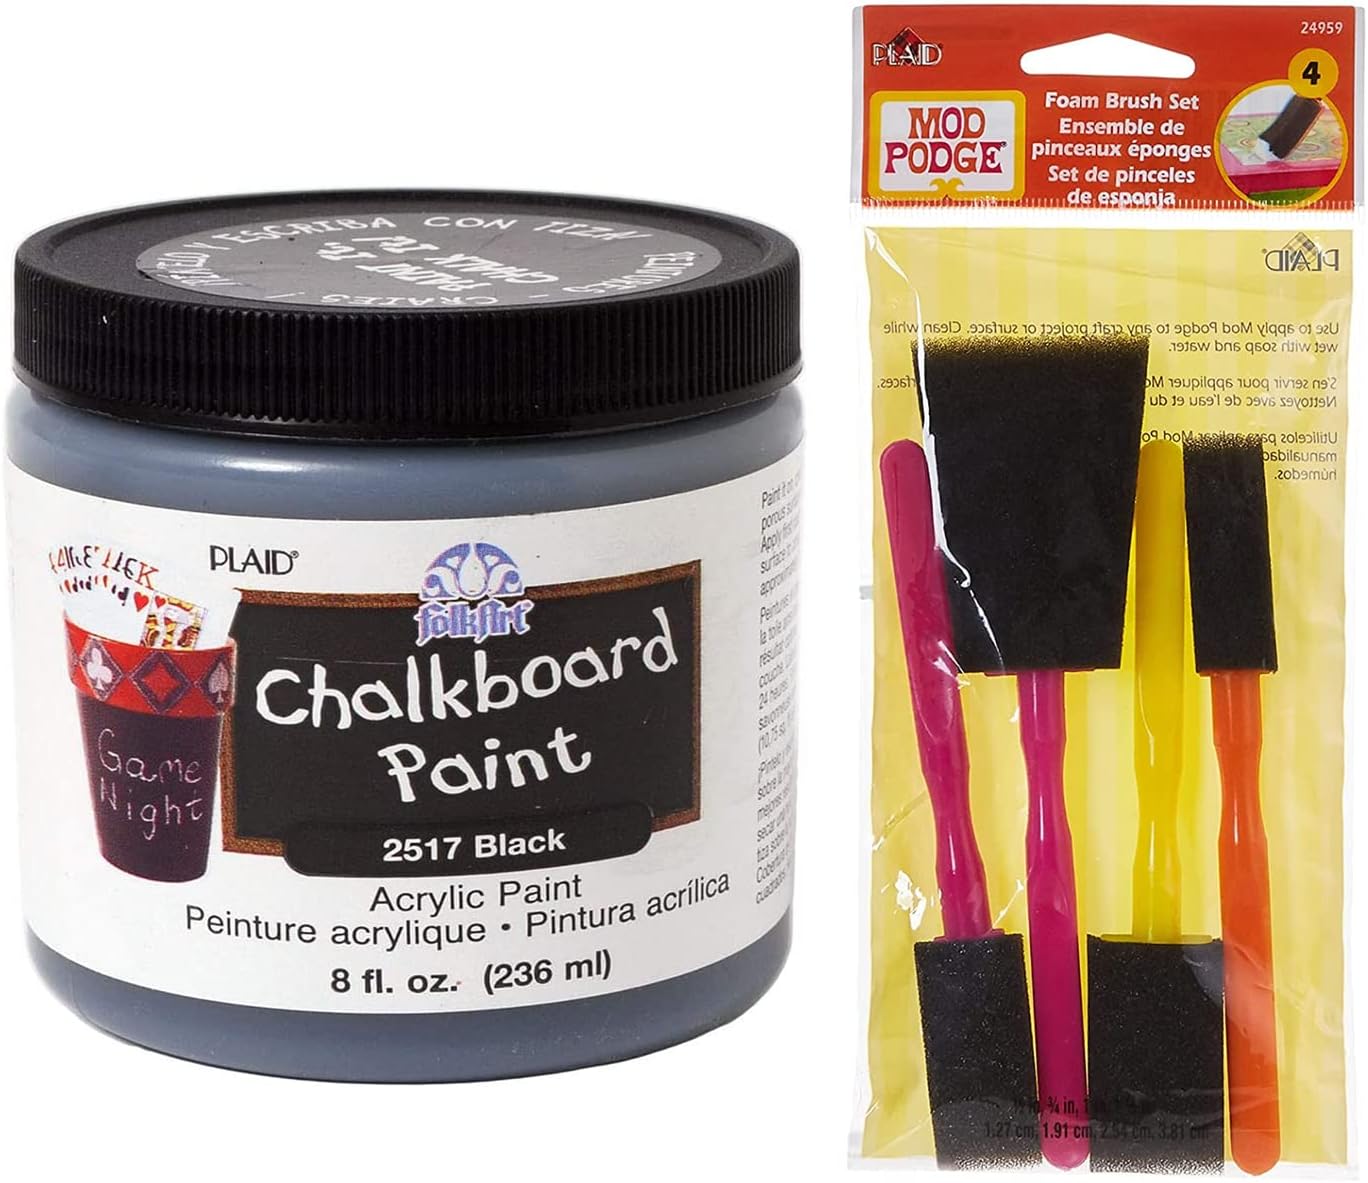 ART SUPPLIES Chalkboard Paint Kit | Quality Black [...]